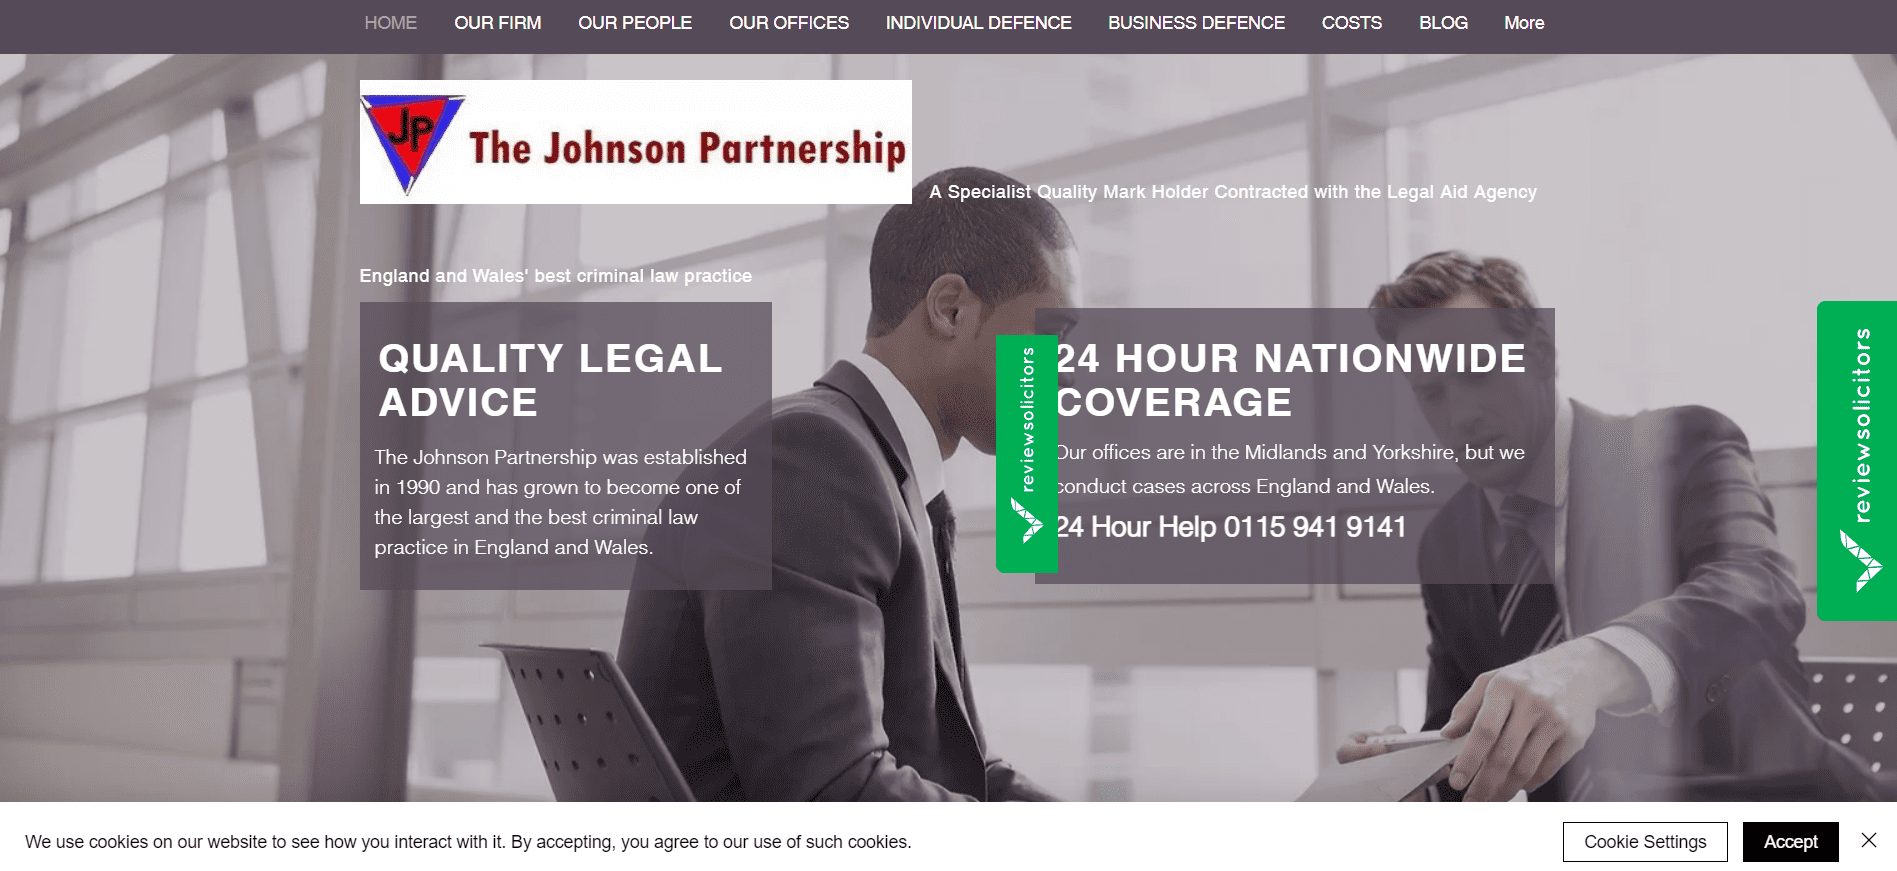 The Johnson Partnership